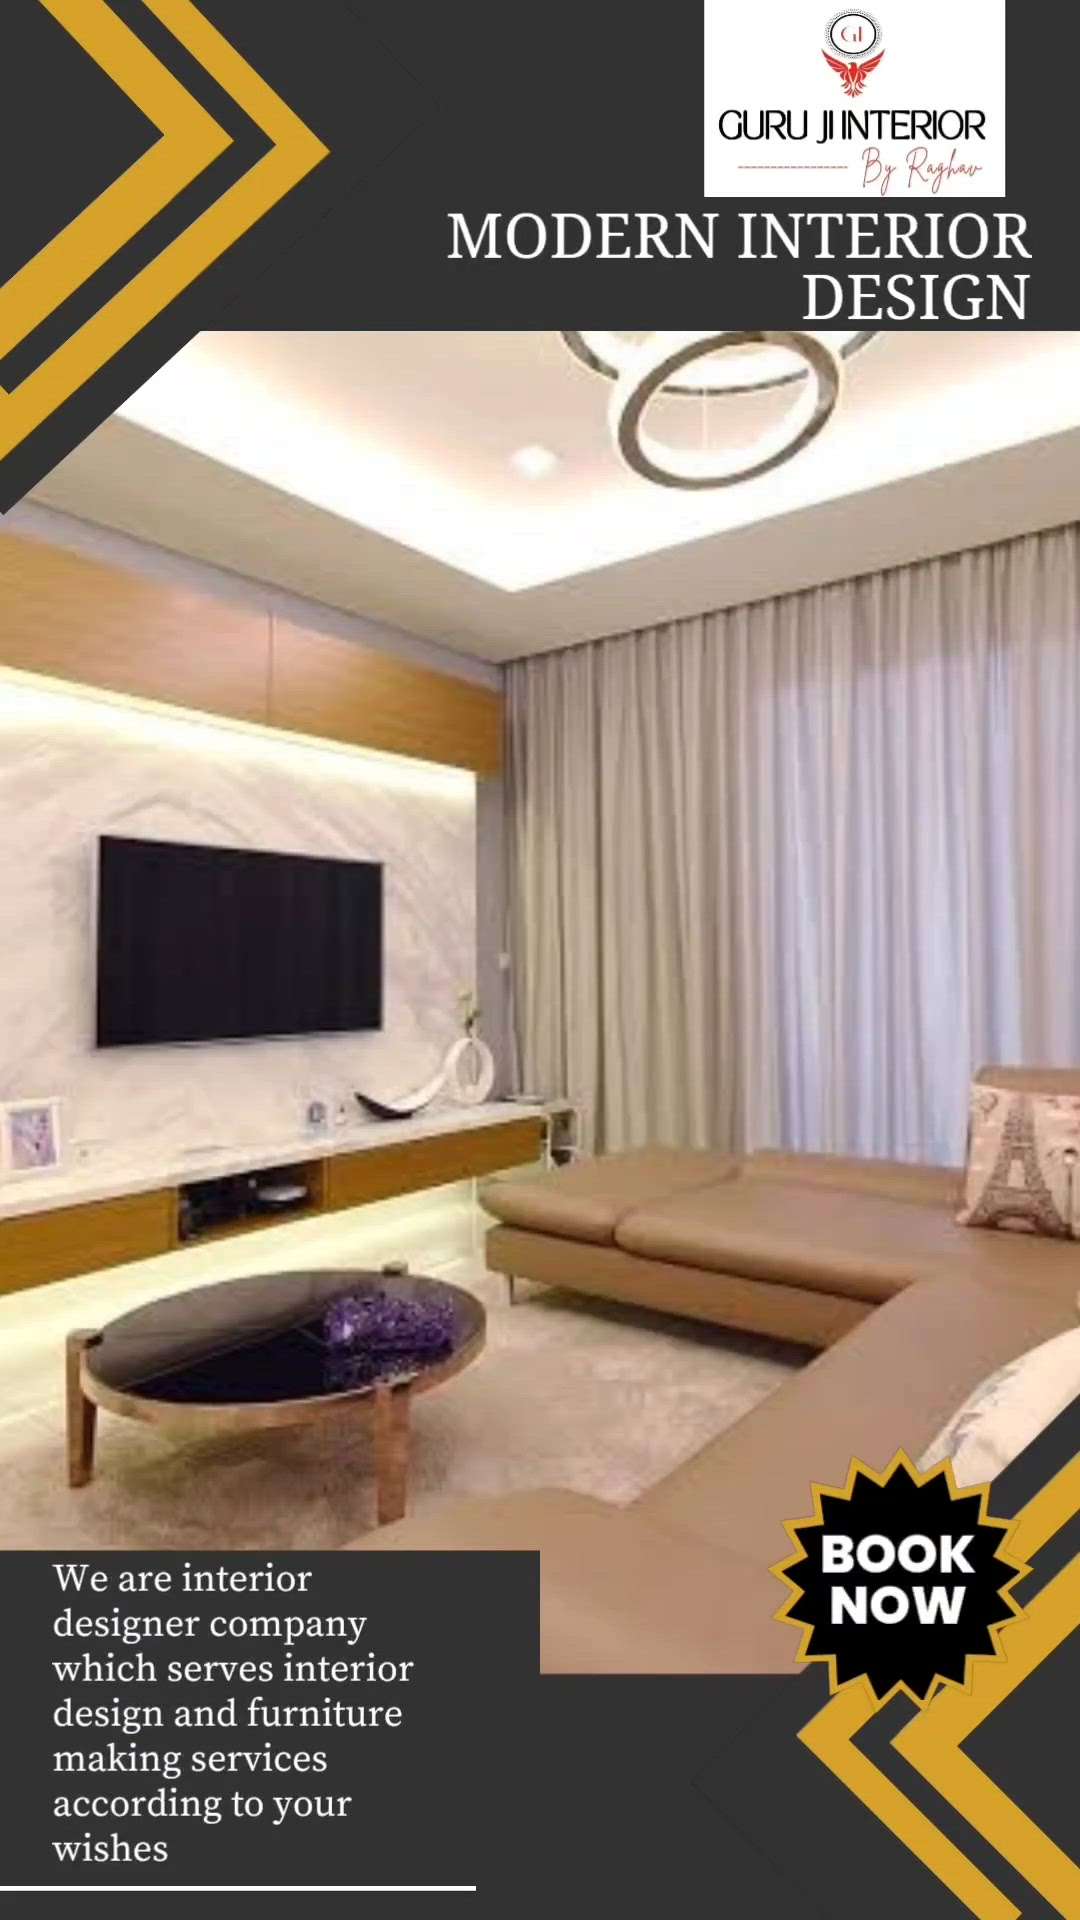 Modern Interior Design 
Get High Quality and Modern Interior Design For Your Dream Home - At Affordable Price ✨
.
Guru ji interior
By Raghav
Call - 9870533947 
#gurujiinteriors
#Interiordesign #luxuryhomes
#PerfectInterior #modularkitchen